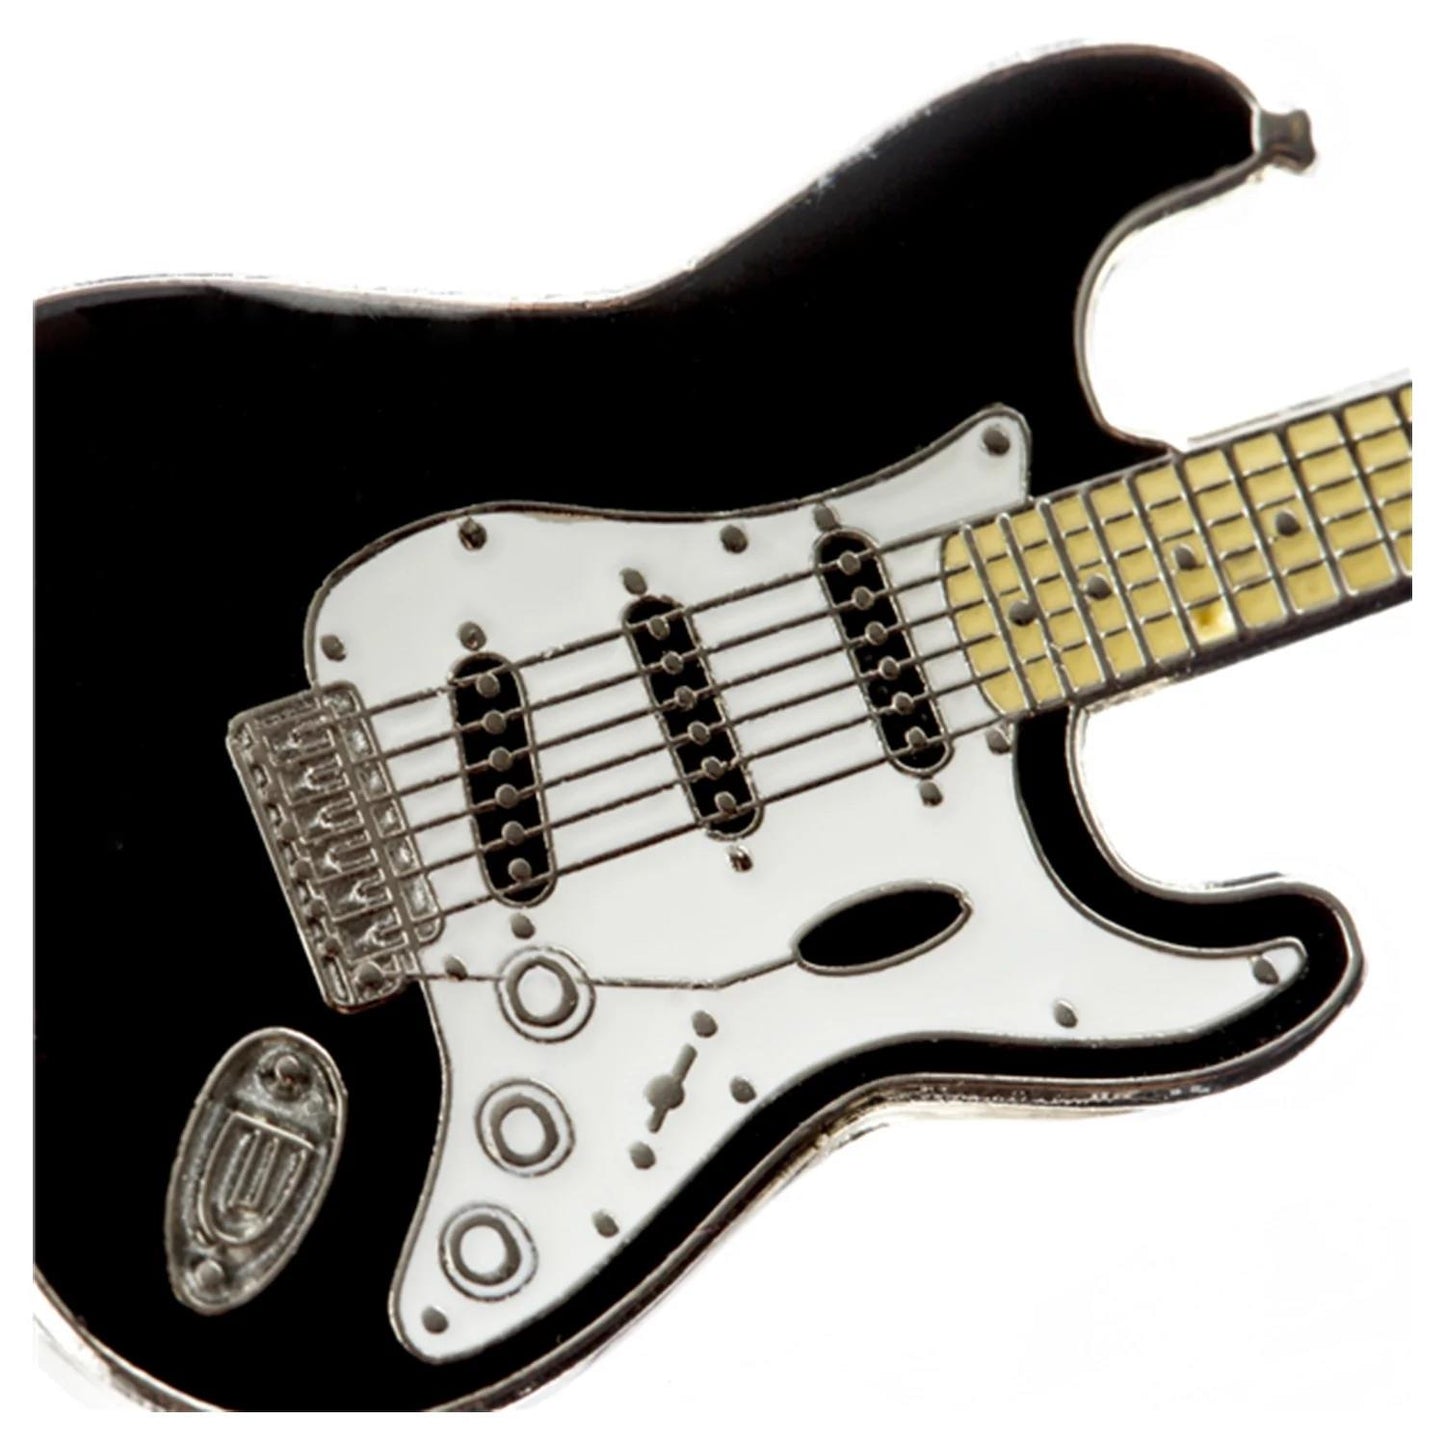 Fender Stratocaster Keychain, Black - Official Merchandise